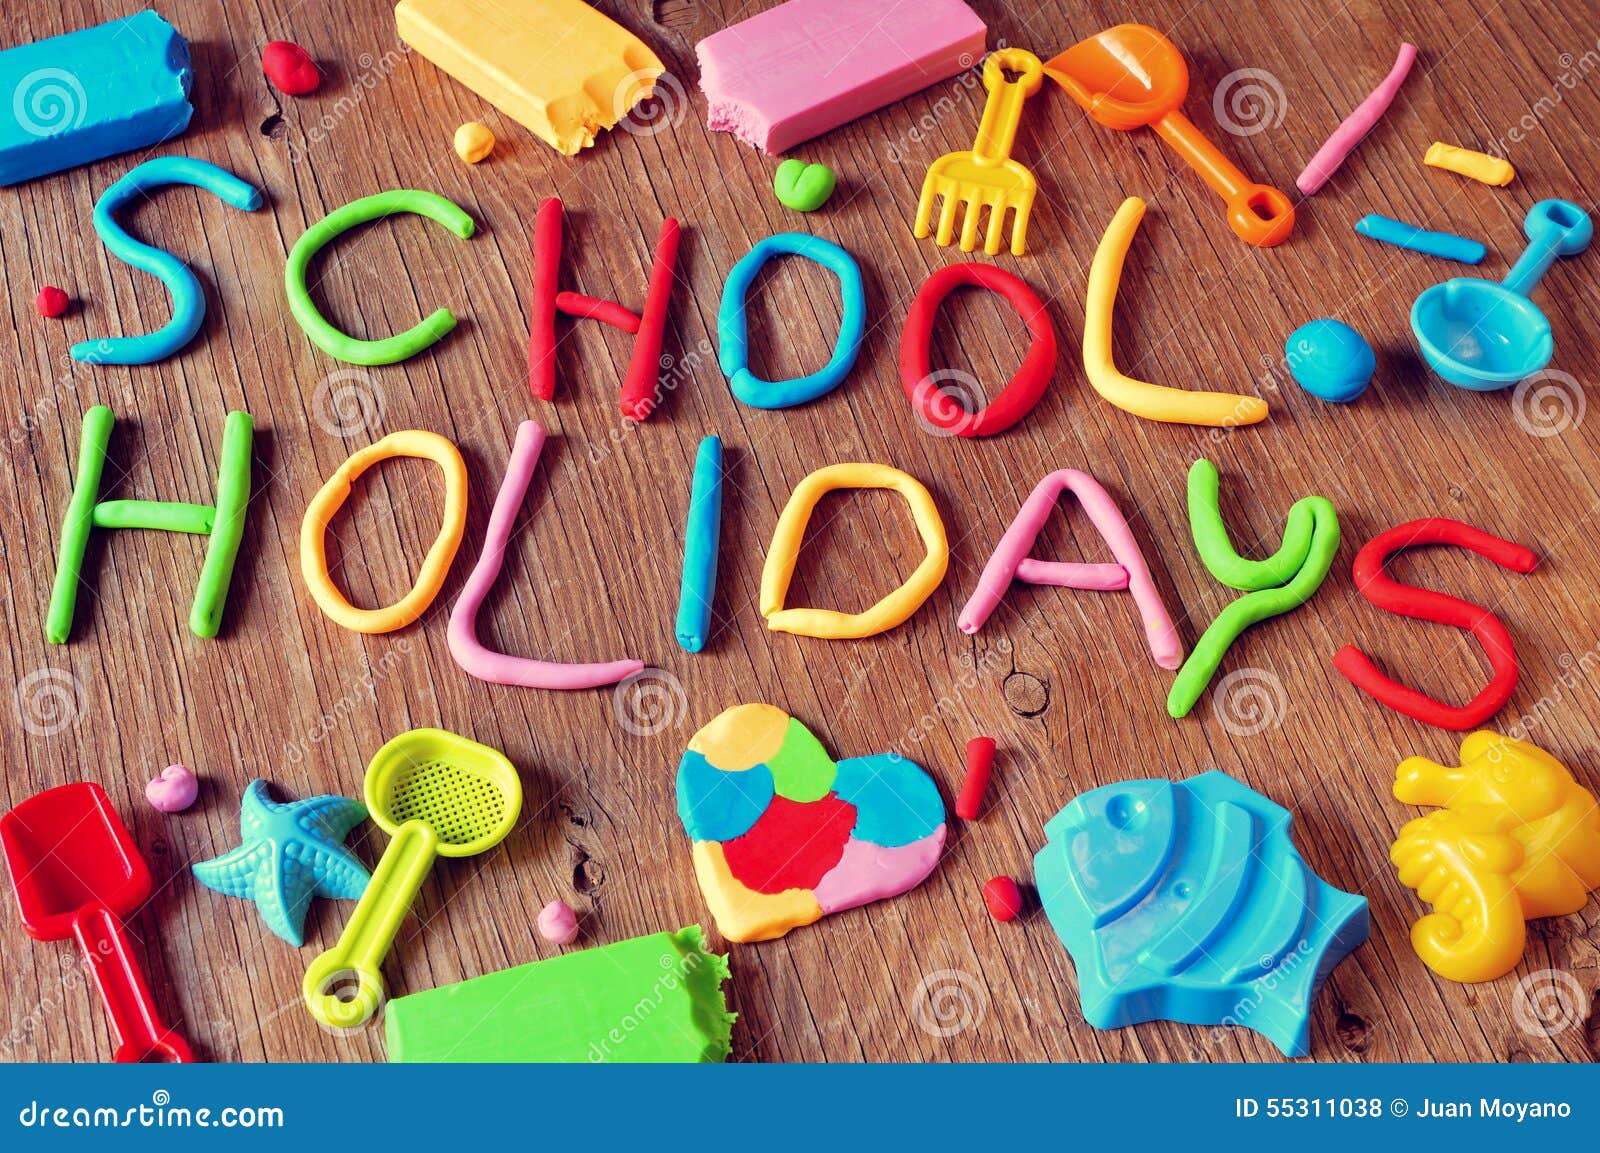 clipart school holidays - photo #16